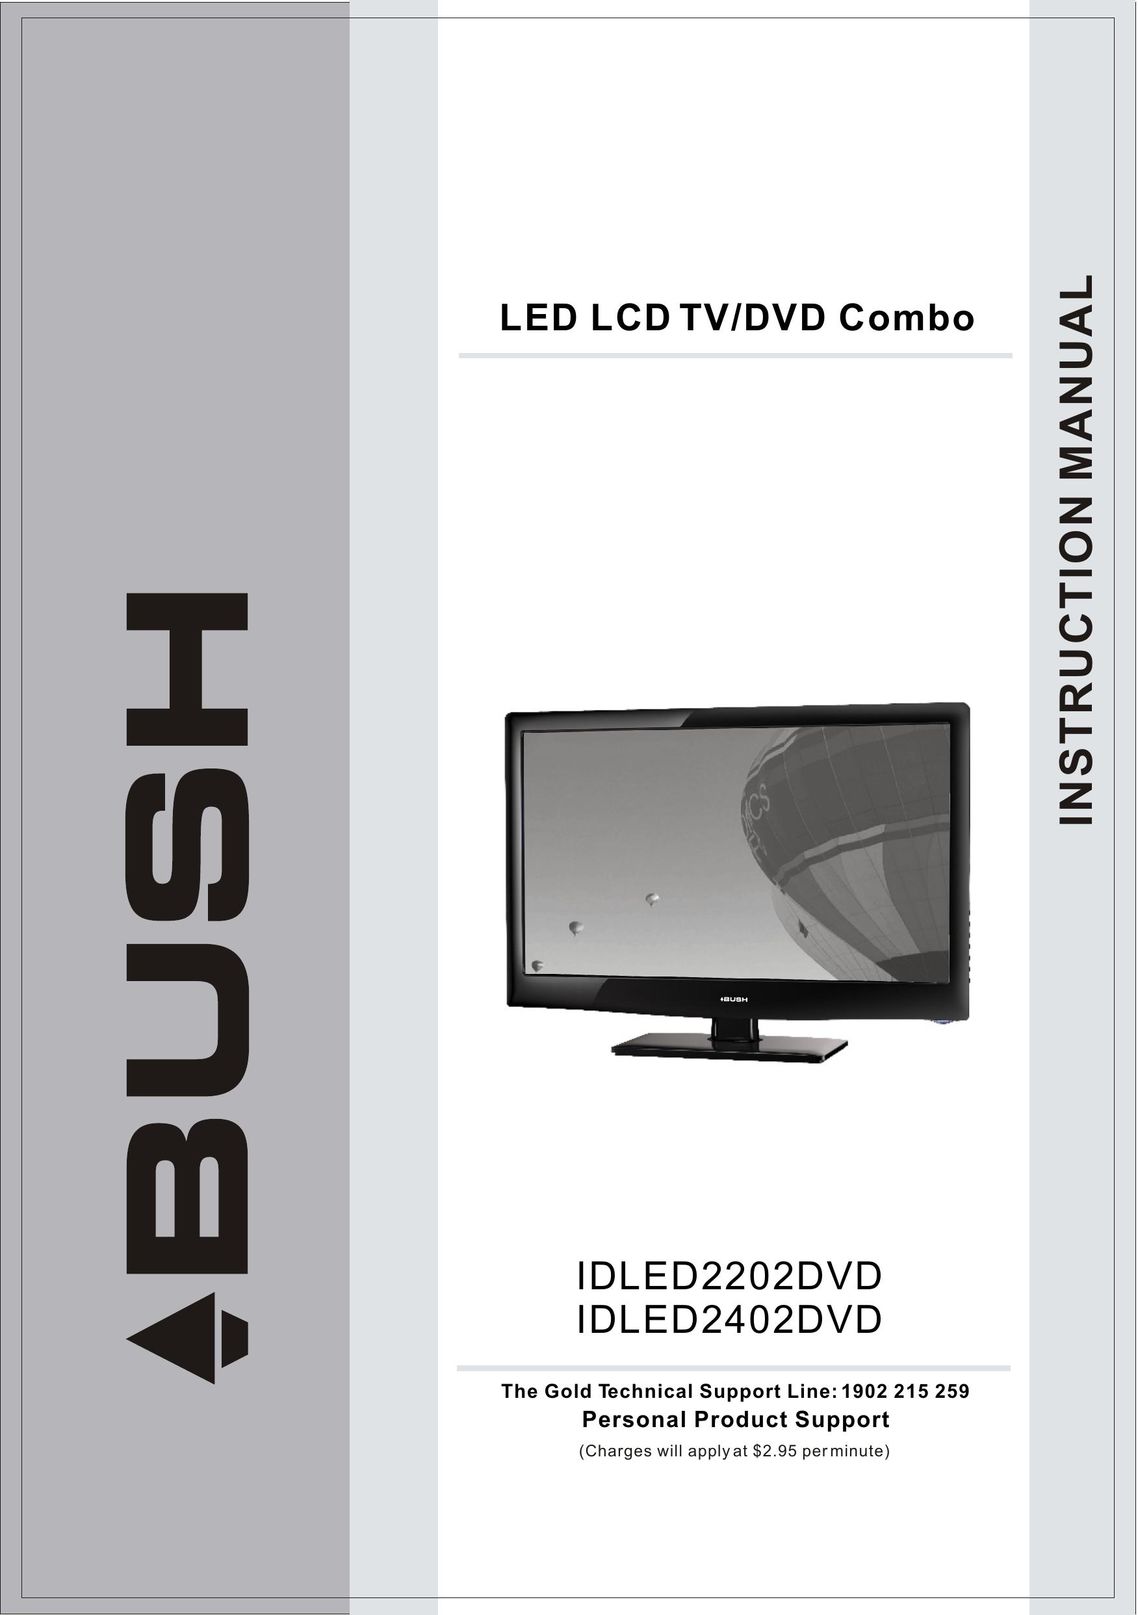 BUSH IDLED2202DVD Flat Panel Television User Manual (Page 1)